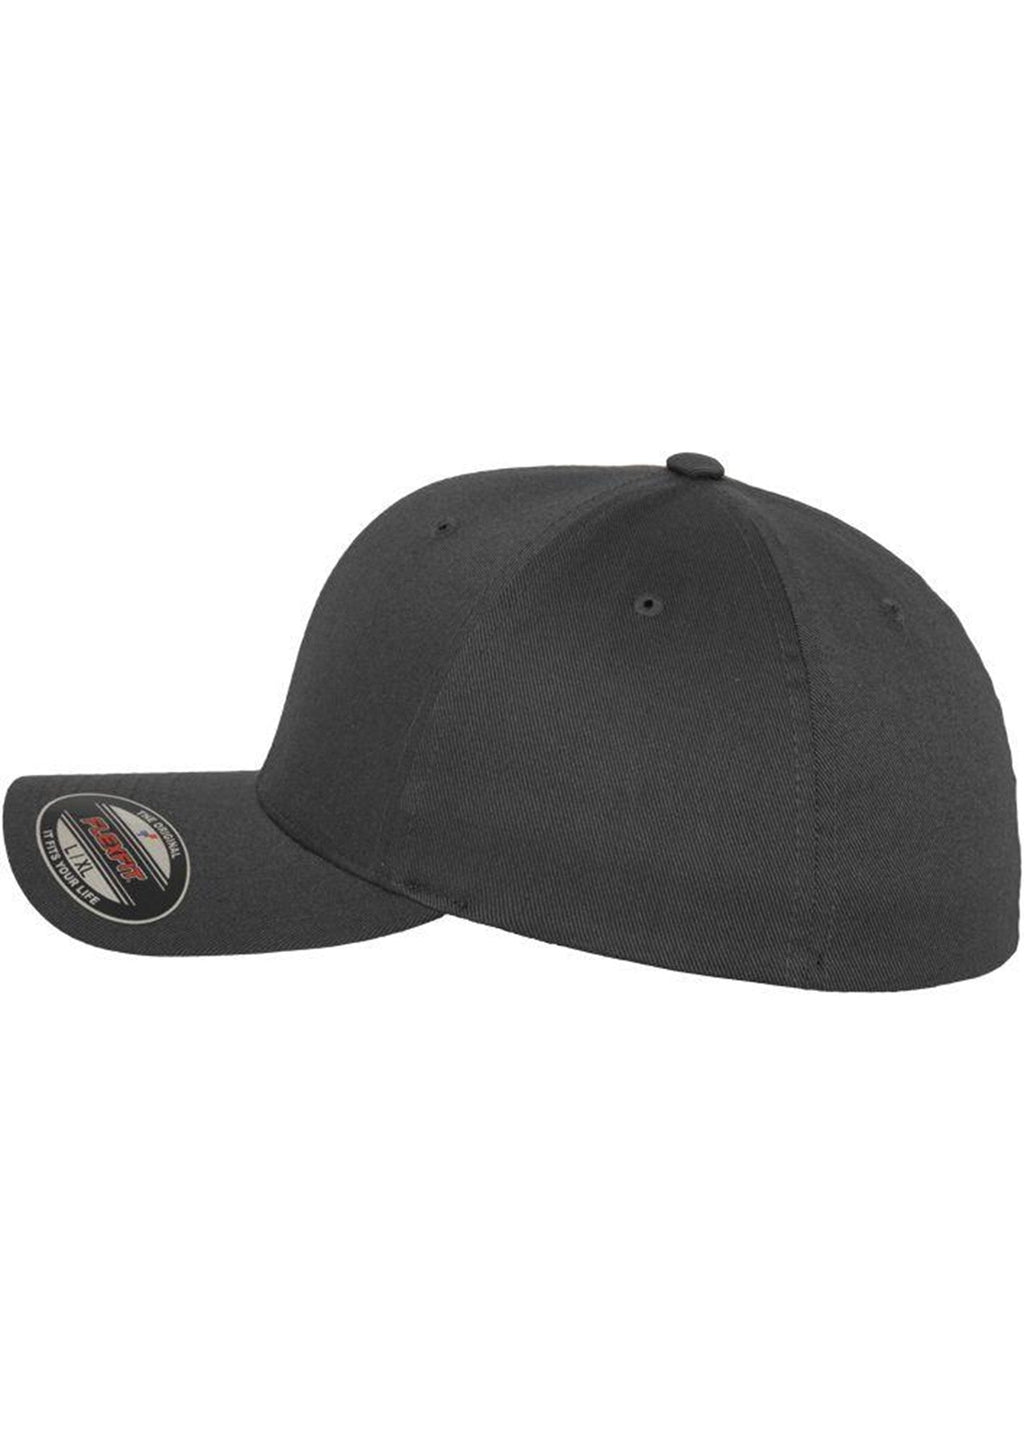 FlexFit Original Baseball Cap - Gray Dark